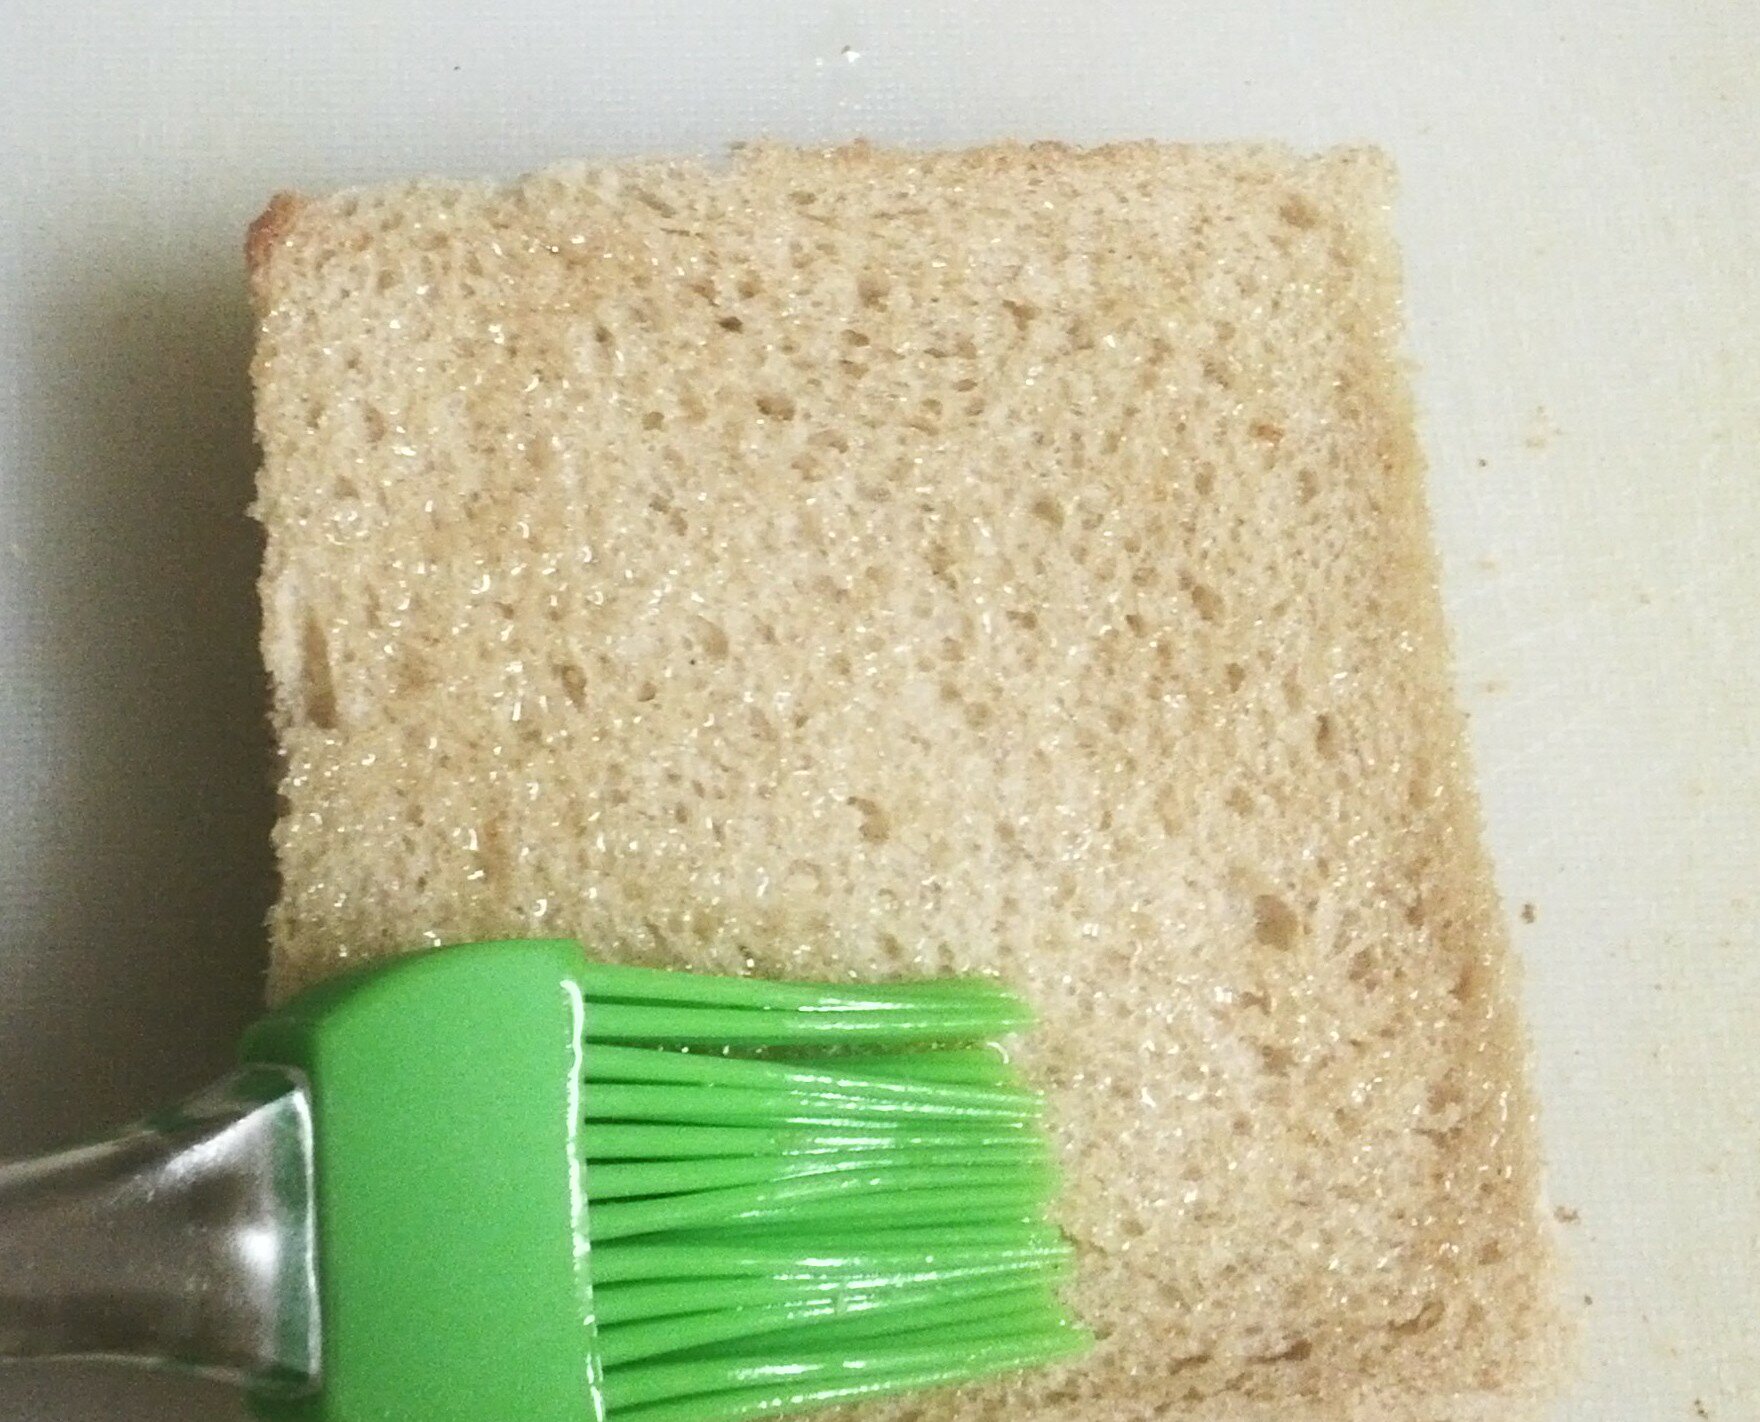 Brushing olive oil on bread slices.